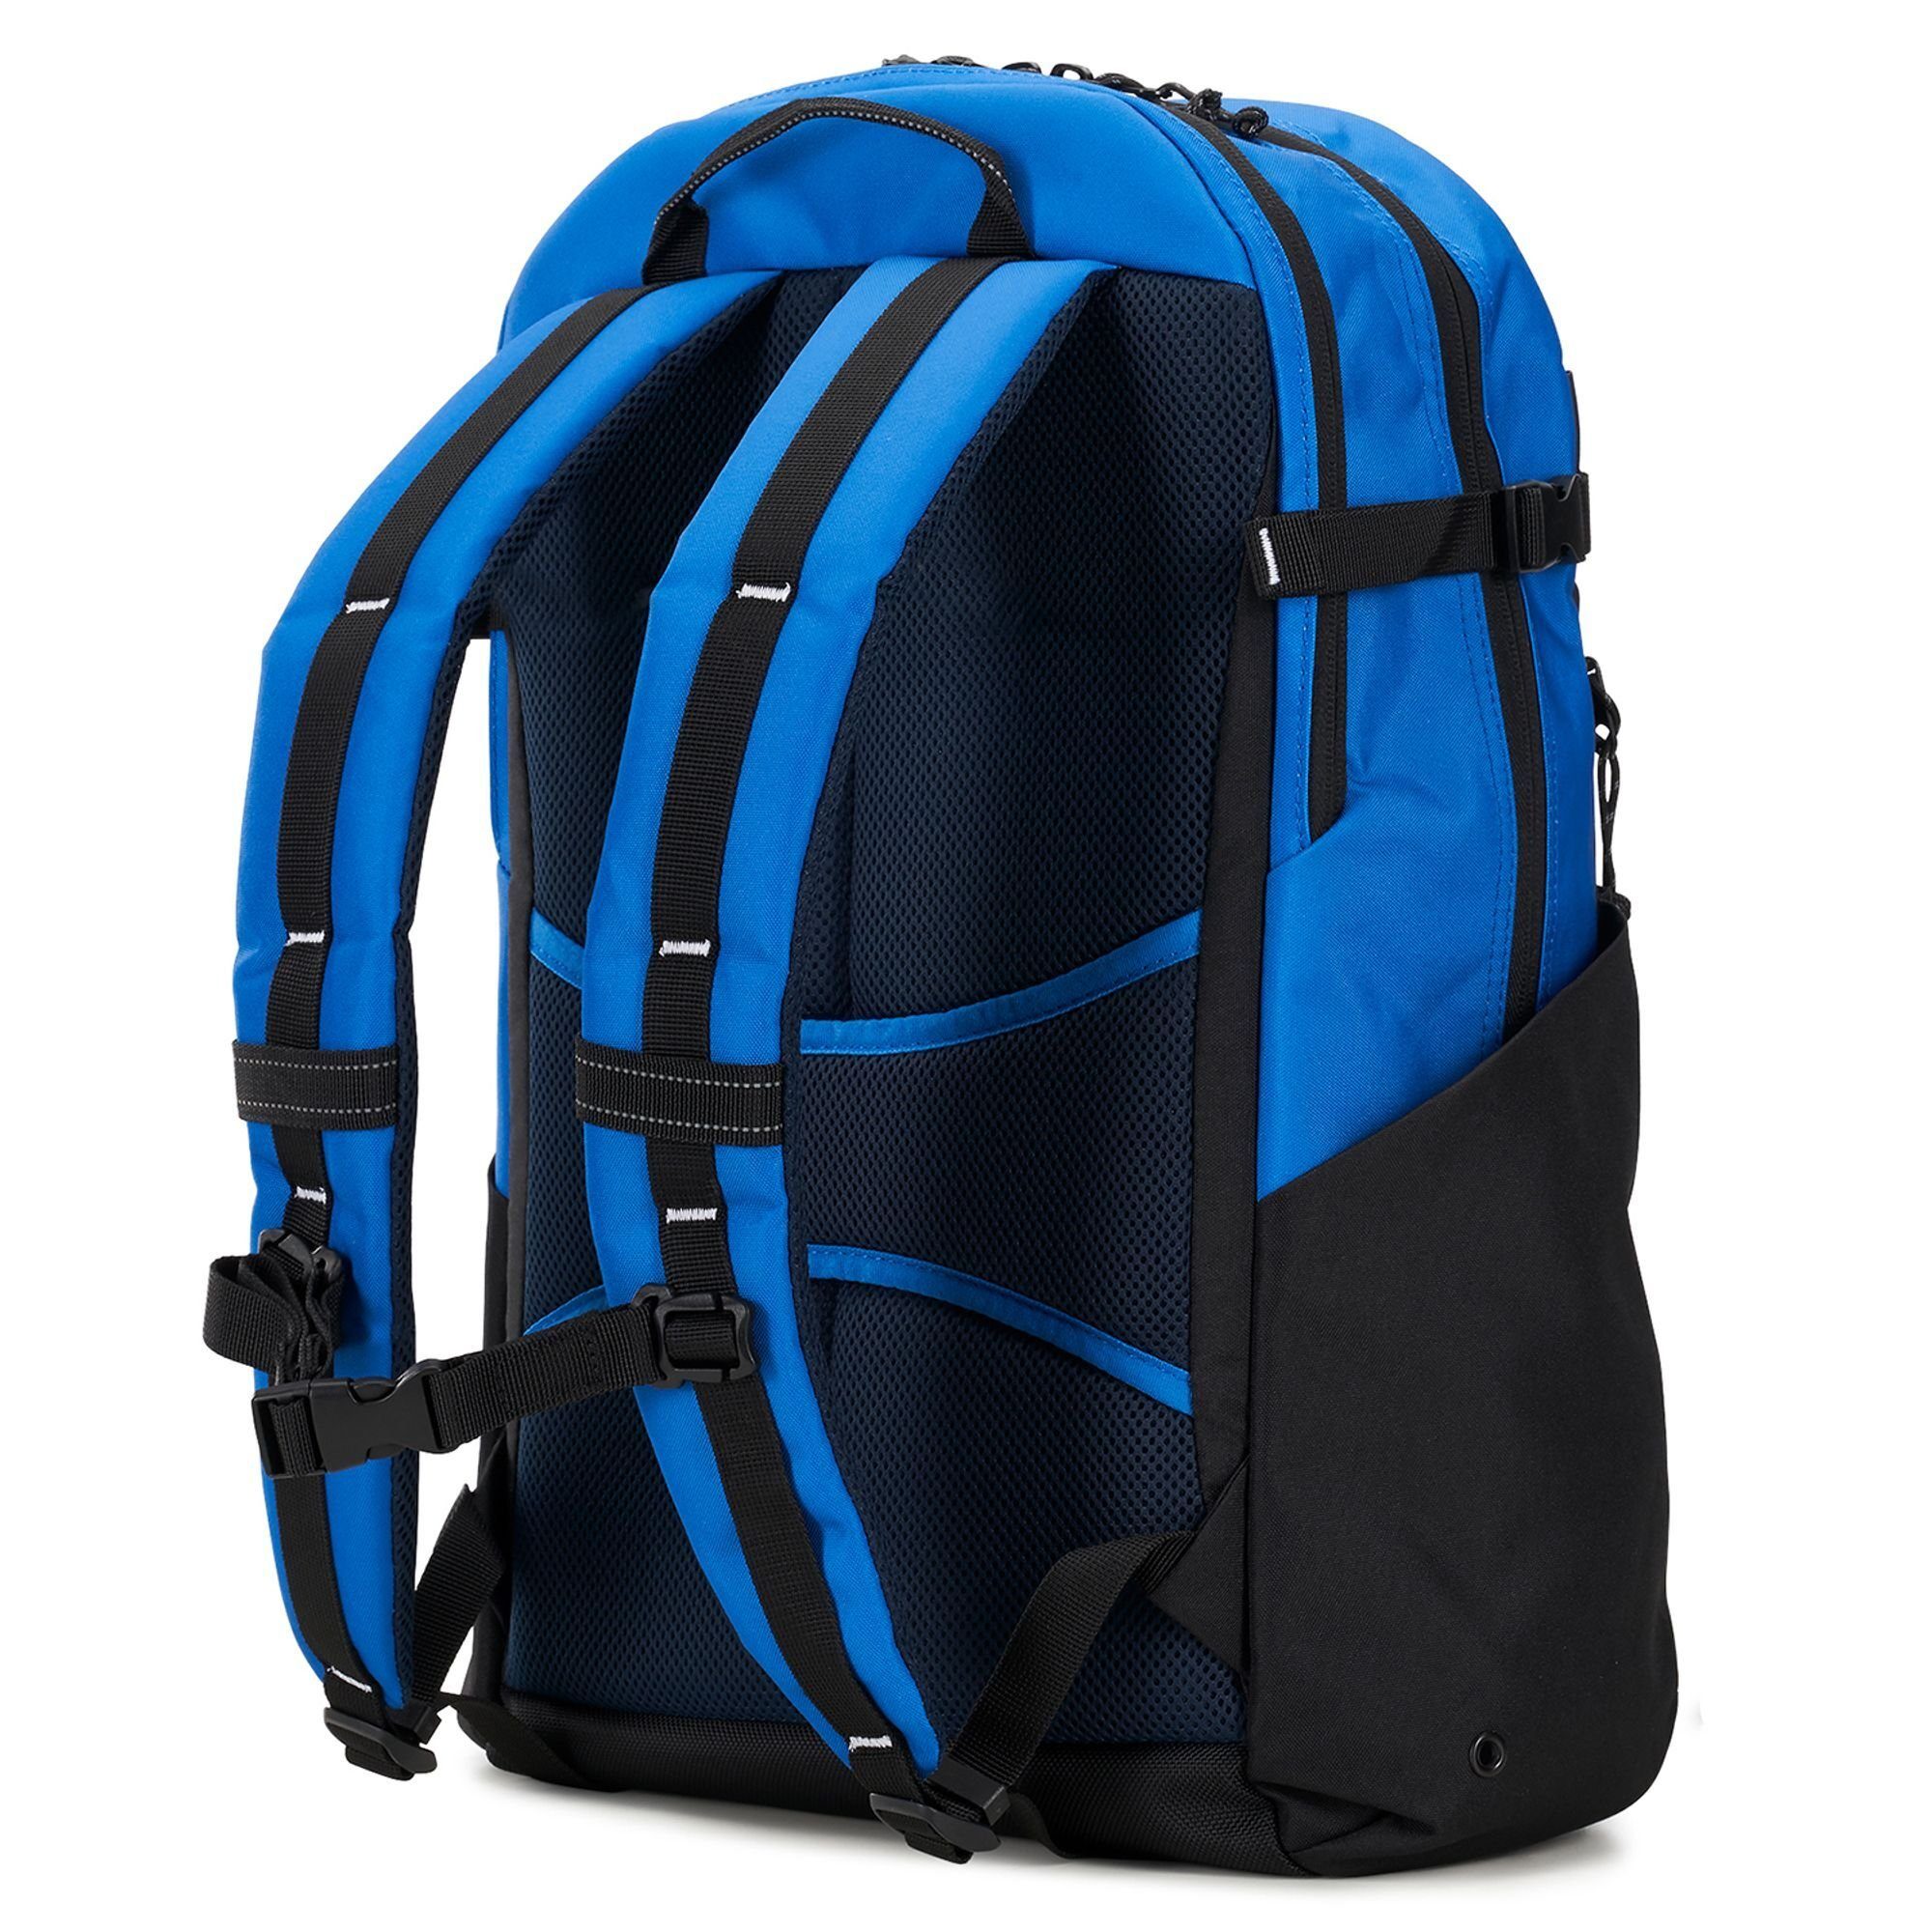 OGIO blue Alpha Daypack +, Polyester